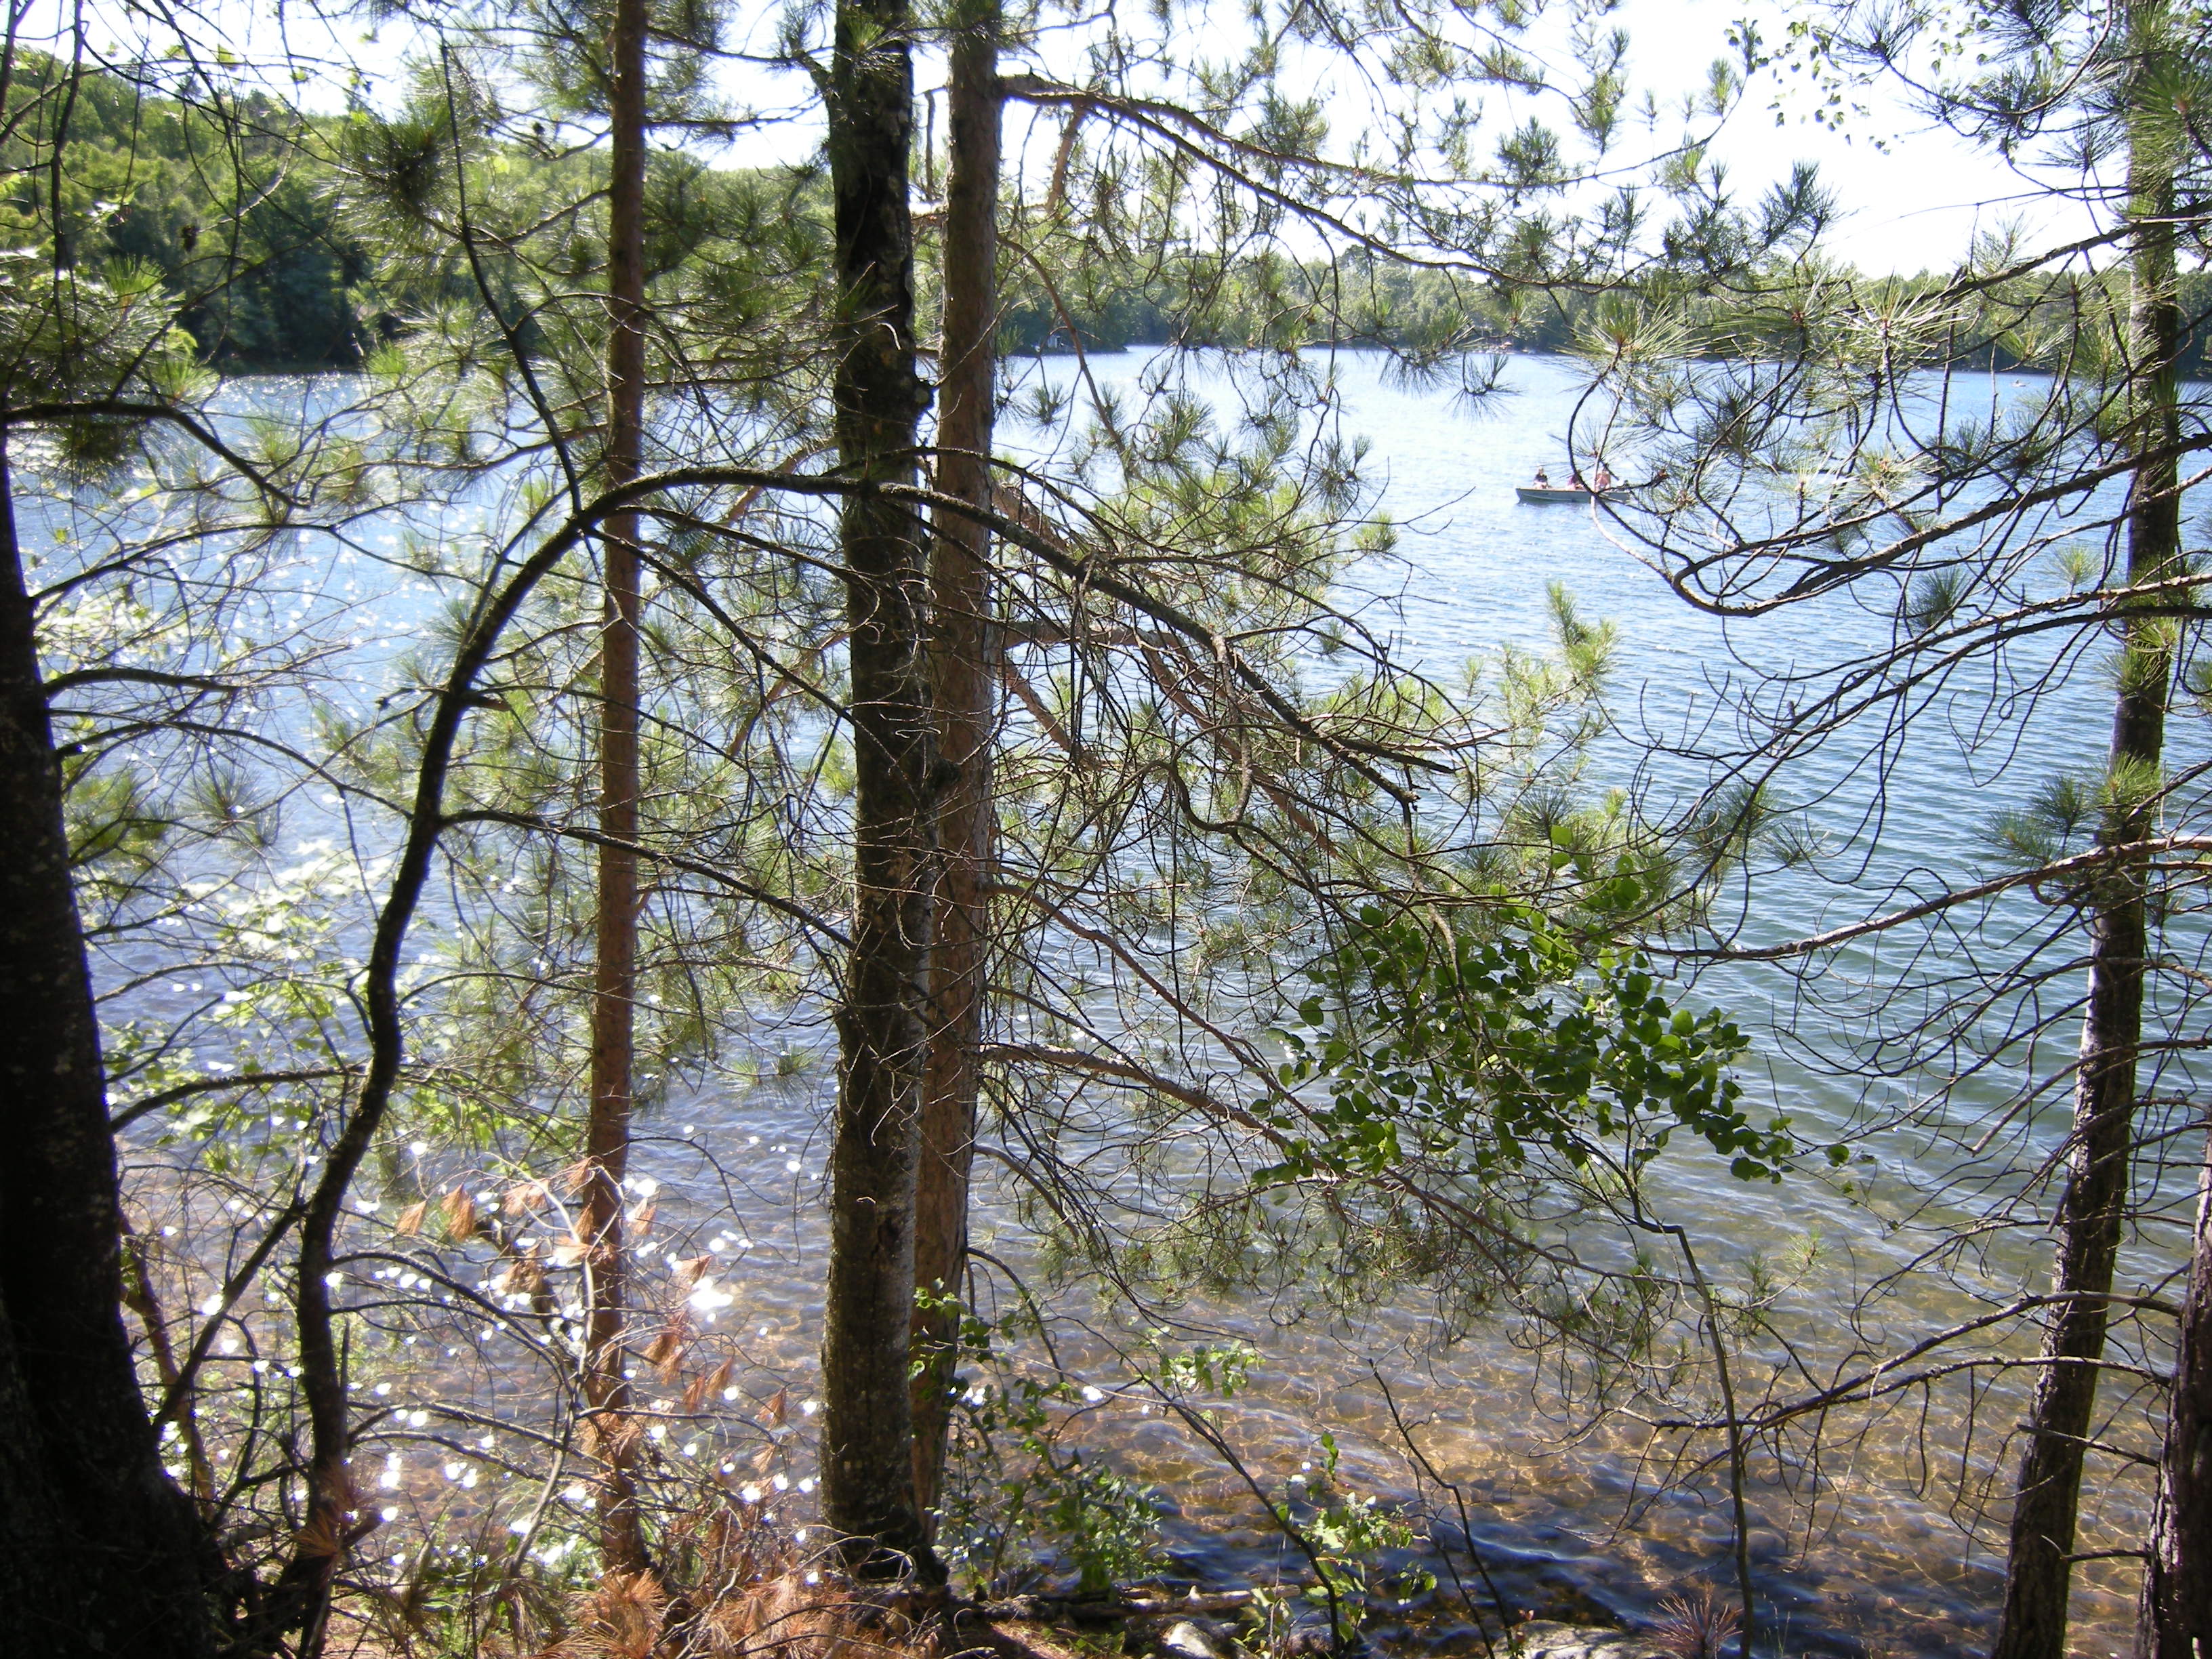 South Blue Lake (as seen from Bearskin Trail)